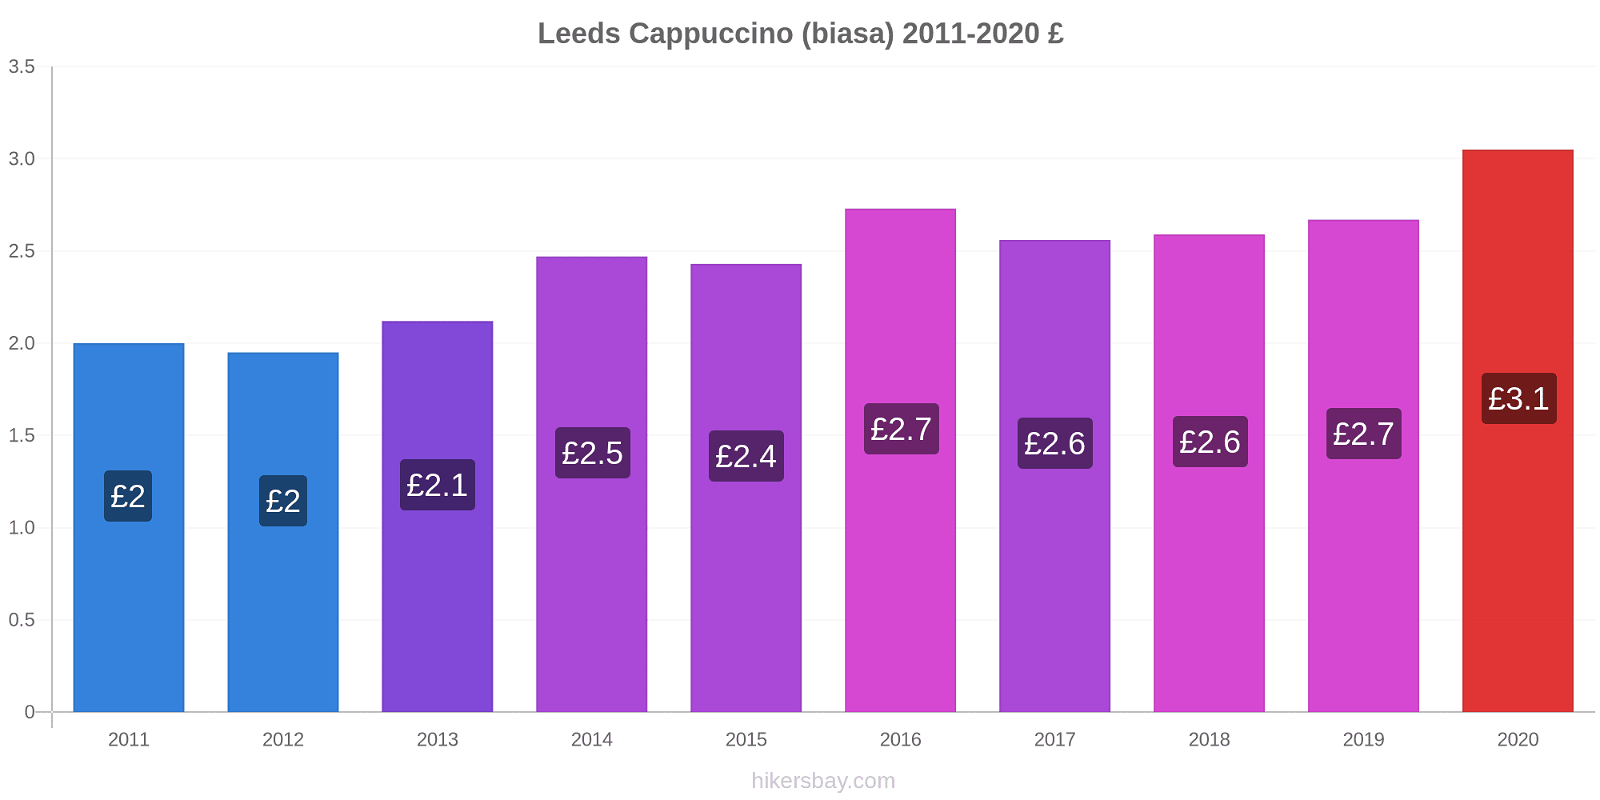 Leeds perubahan harga Cappuccino (biasa) hikersbay.com